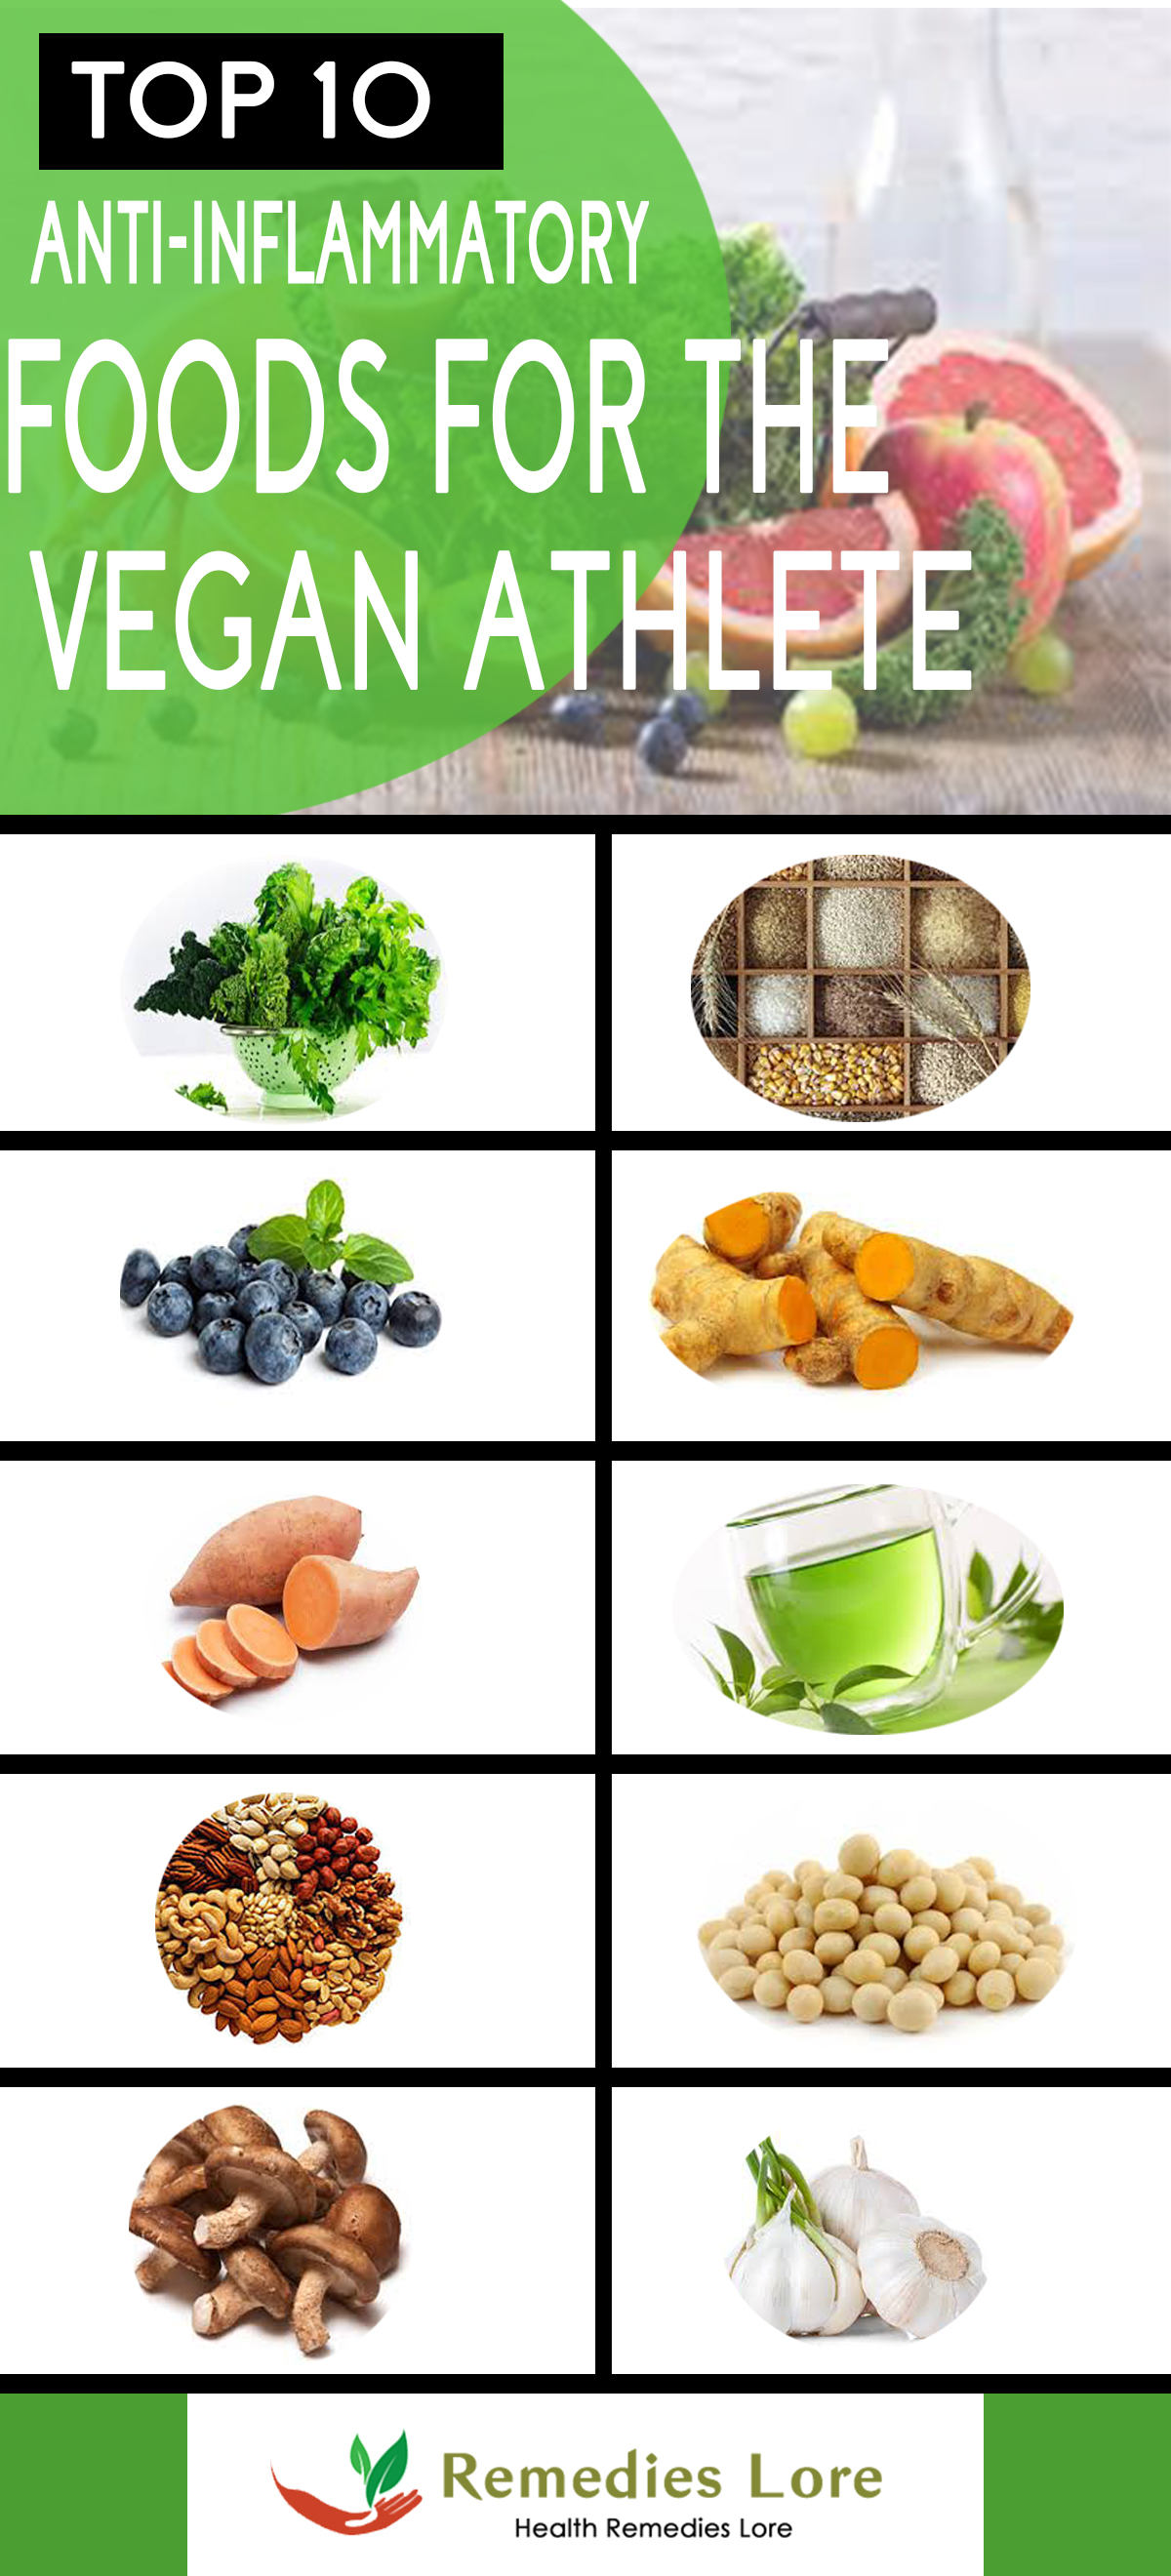 Top 10 Anti-Inflammatory Foods for the Vegan Athlete - Remedies Lore